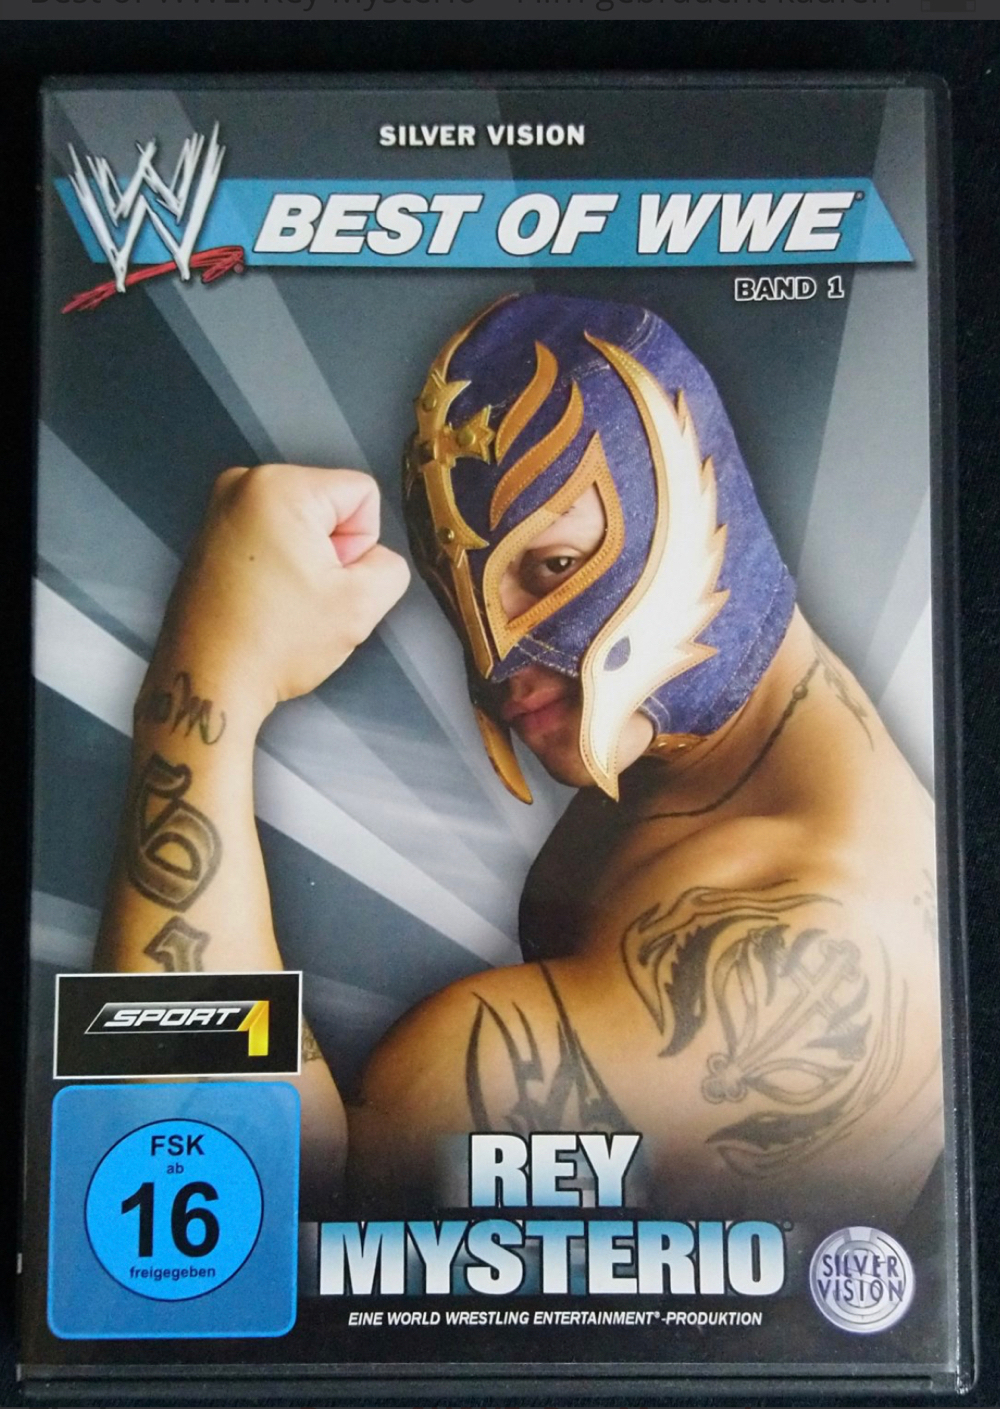 Best of WWE: Rey Mysterio